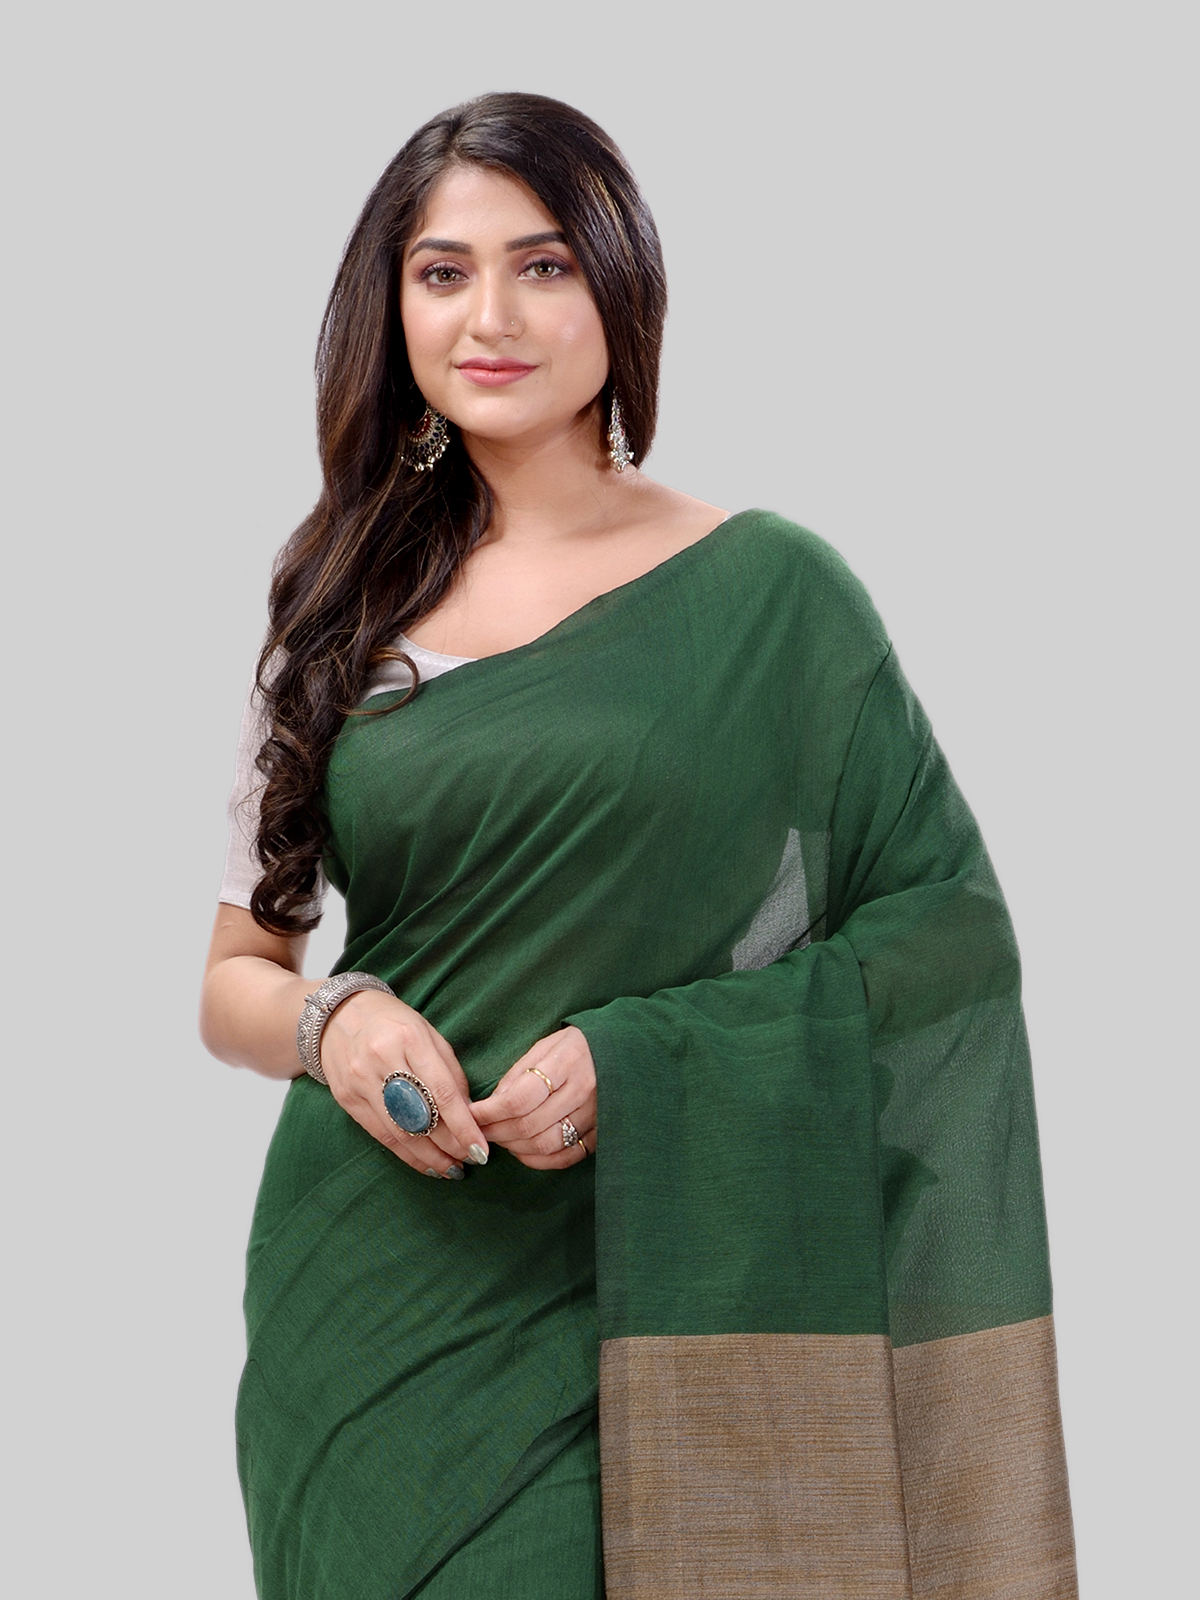 DESH BIDESH Women`s Khadi Cotton Handloom RupSagar Design Saree Without Blouse Piece(Green)